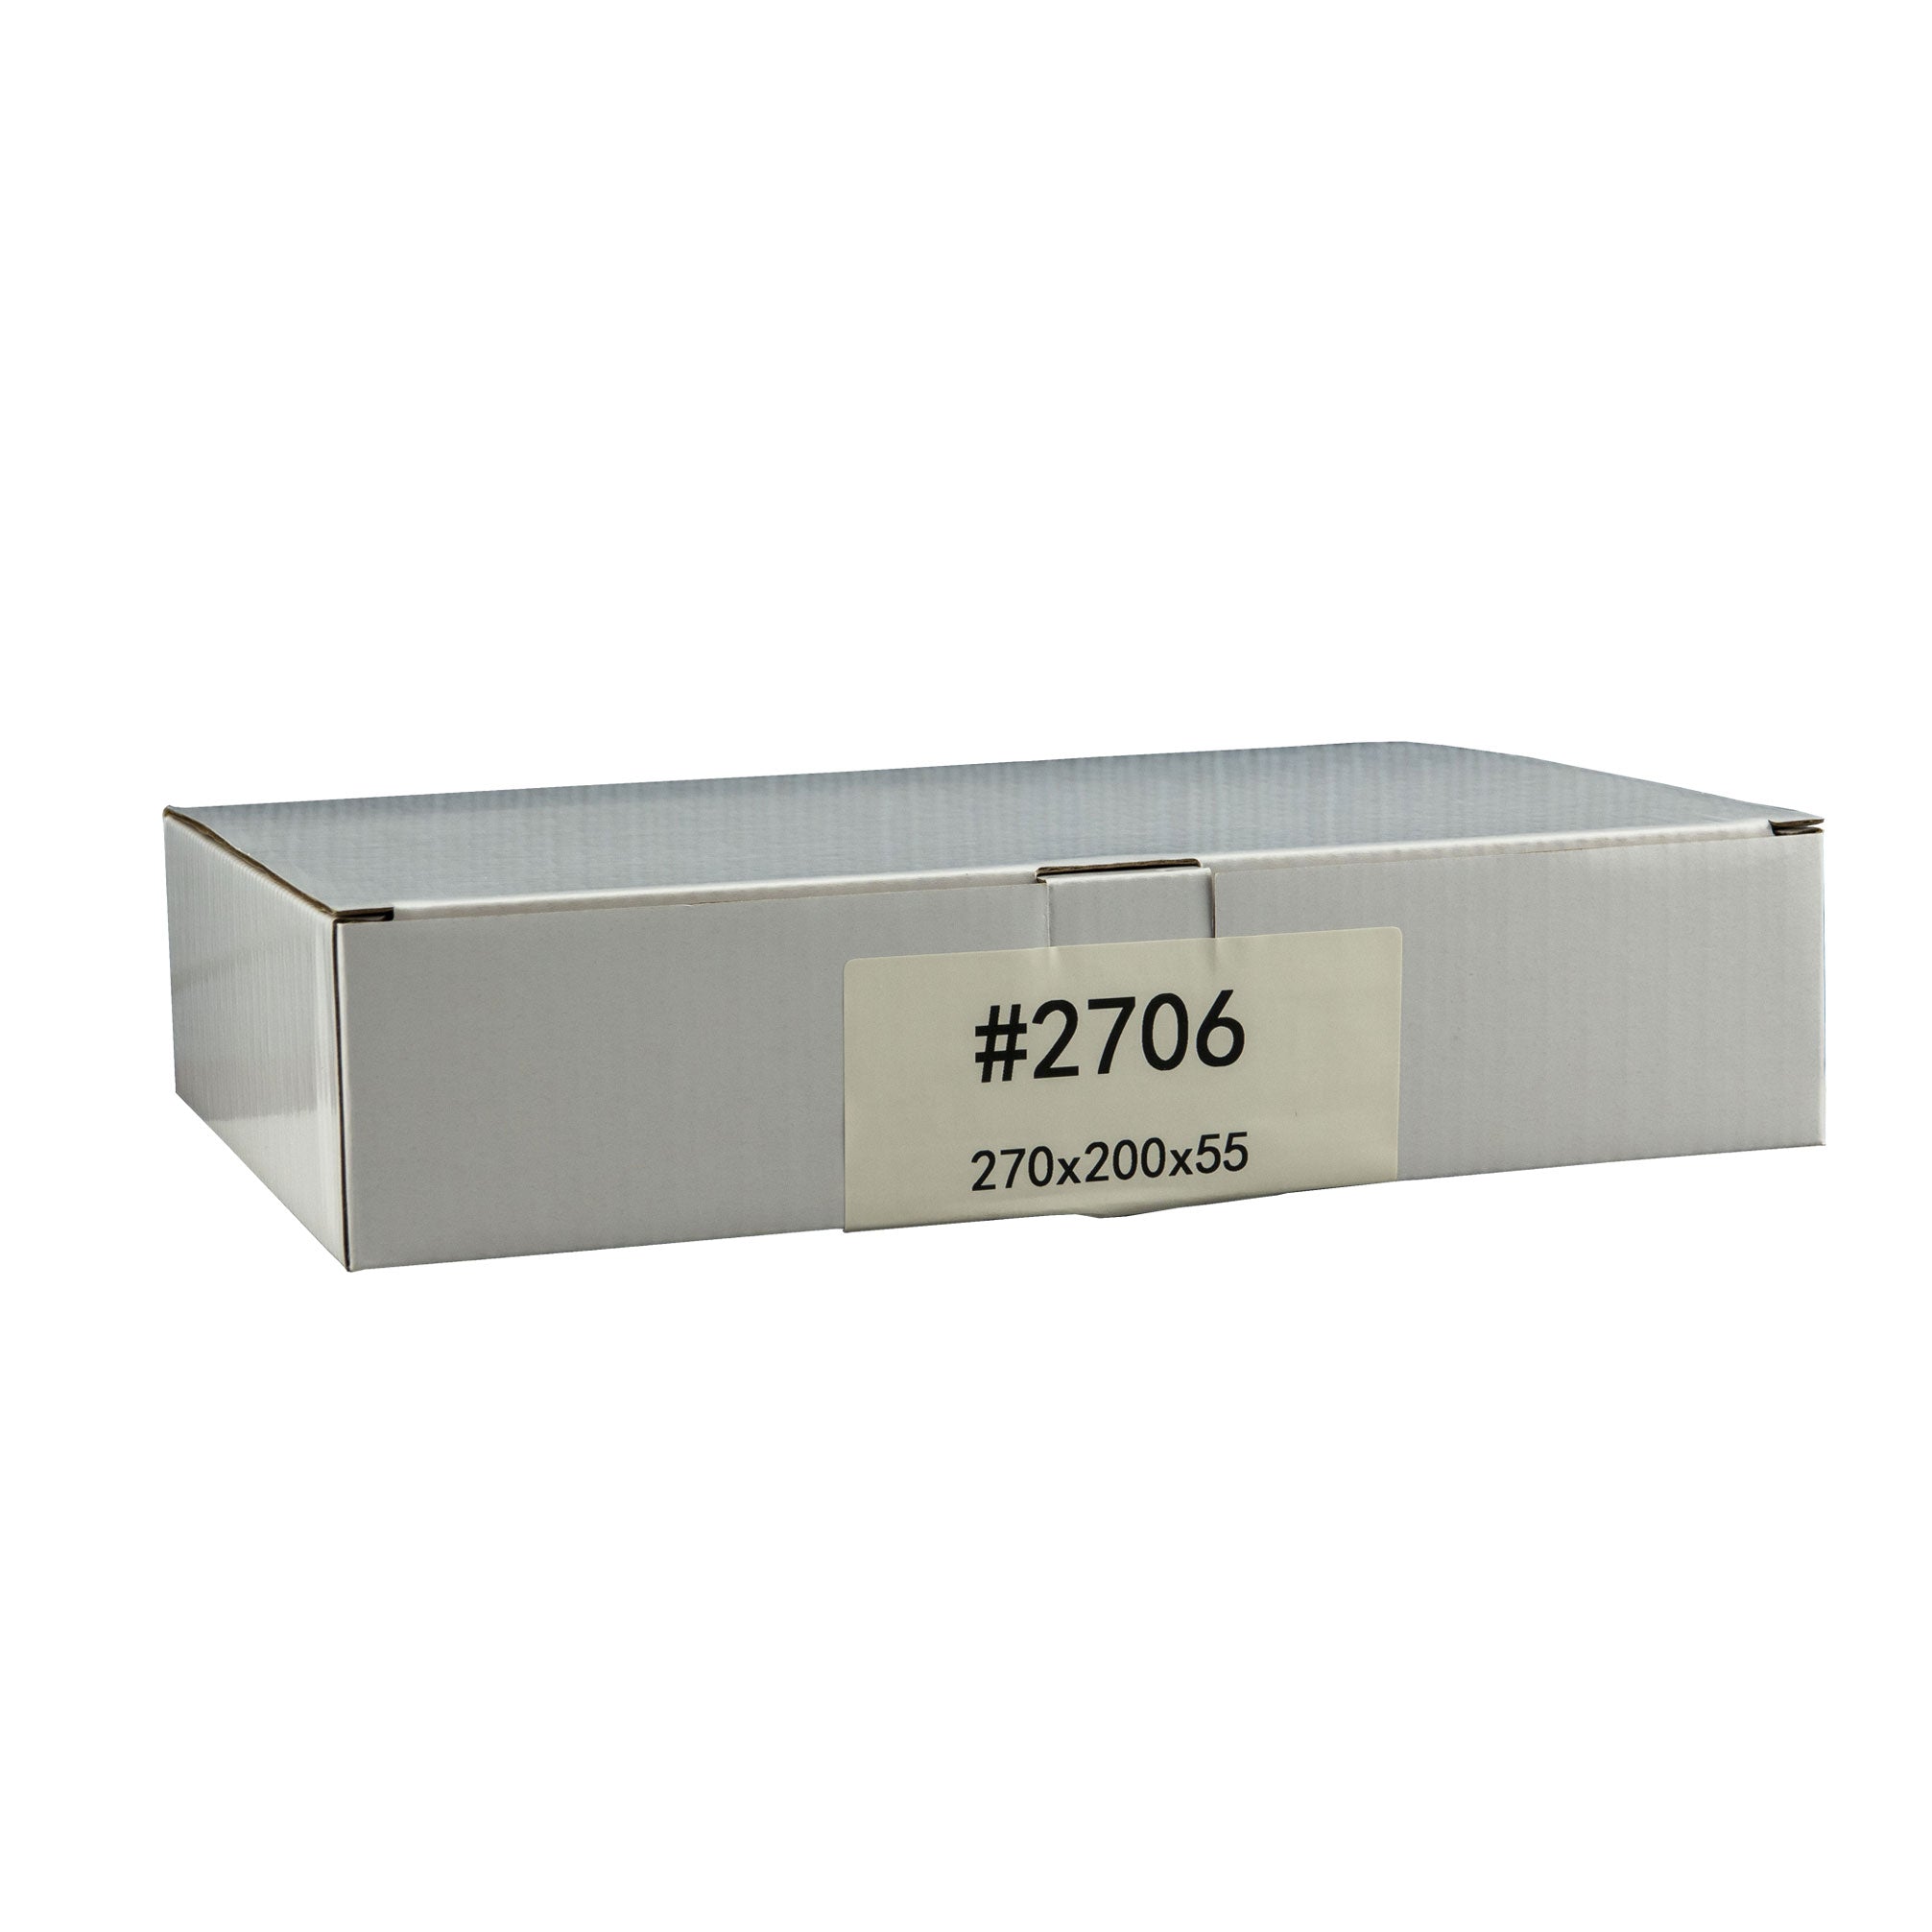 270mm x 200mm x 55mm White Carton Cardboard Shipping Box (#2706)